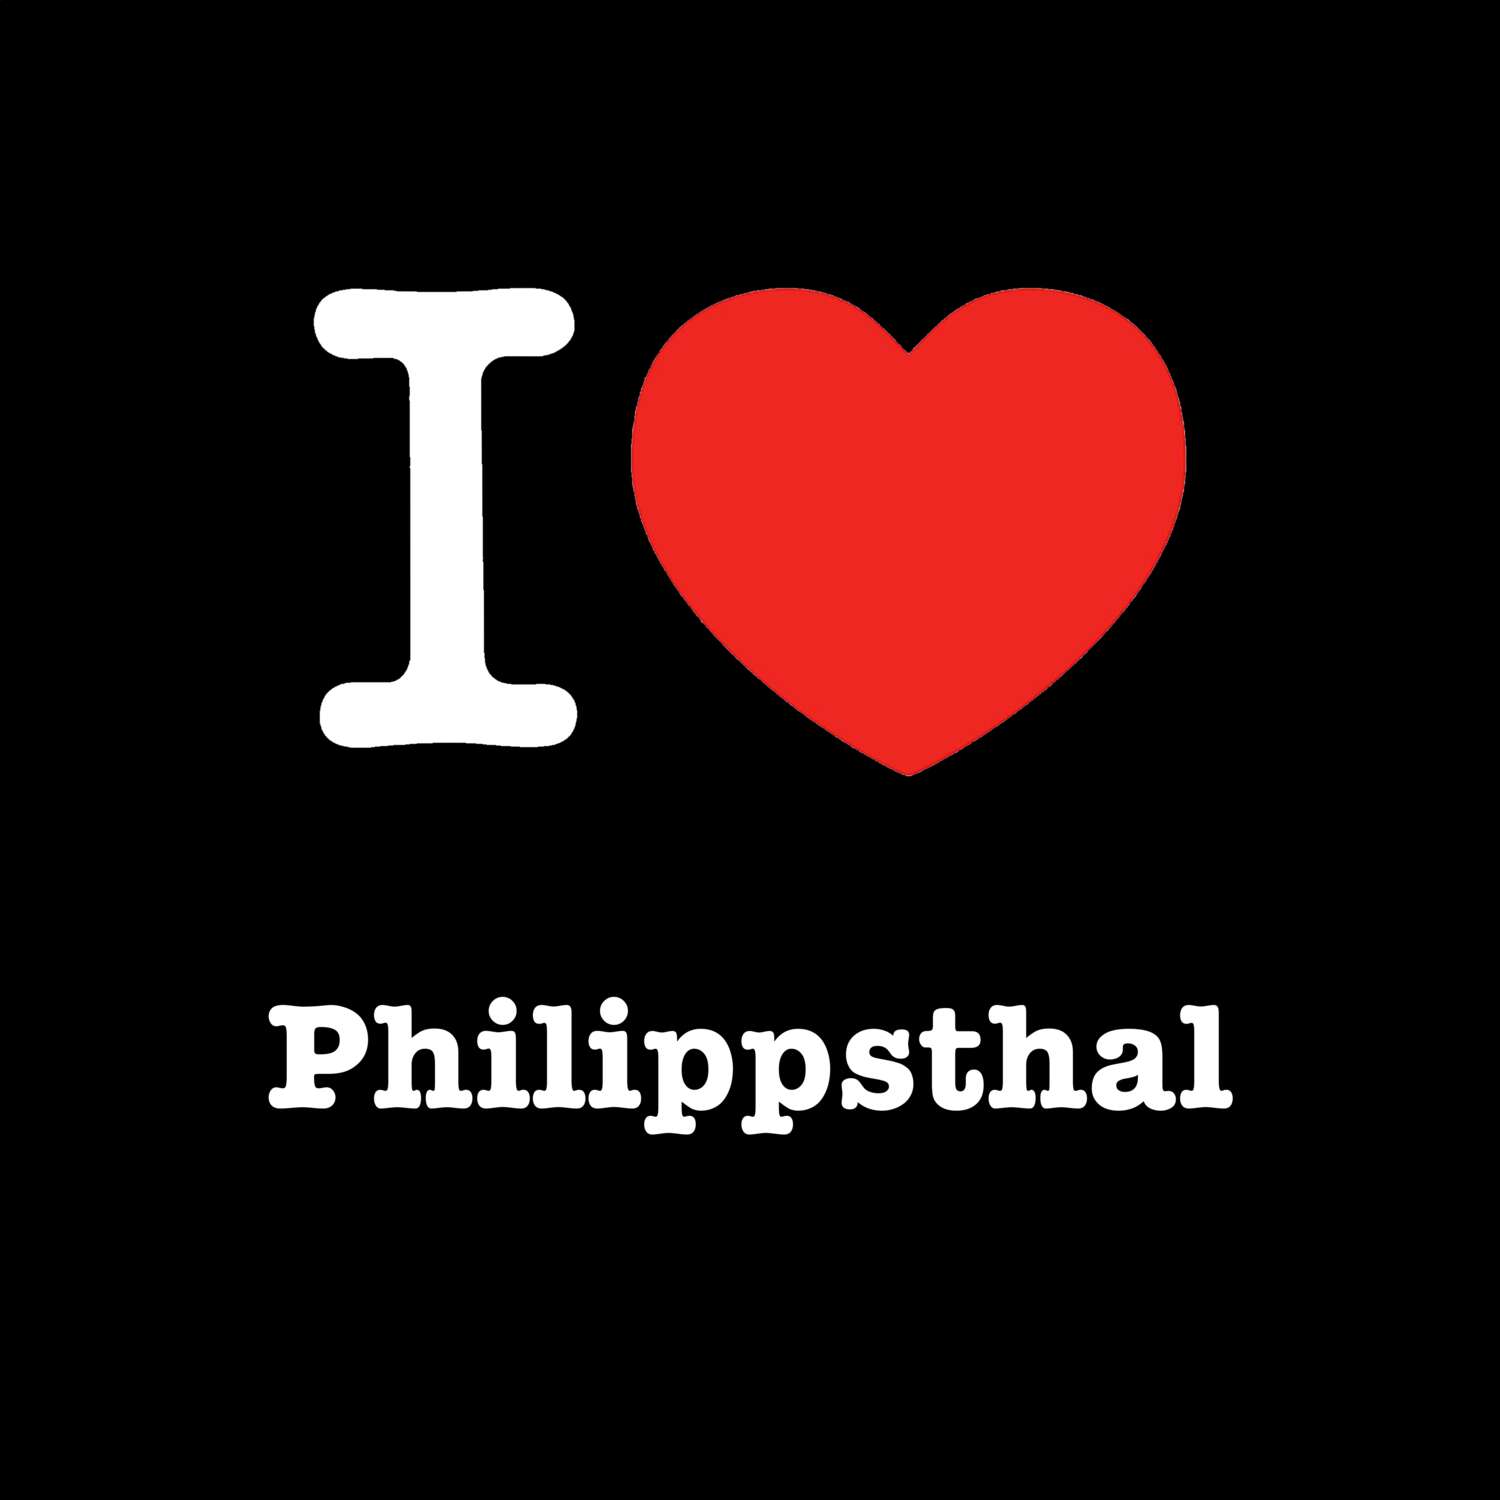 Philippsthal T-Shirt »I love«